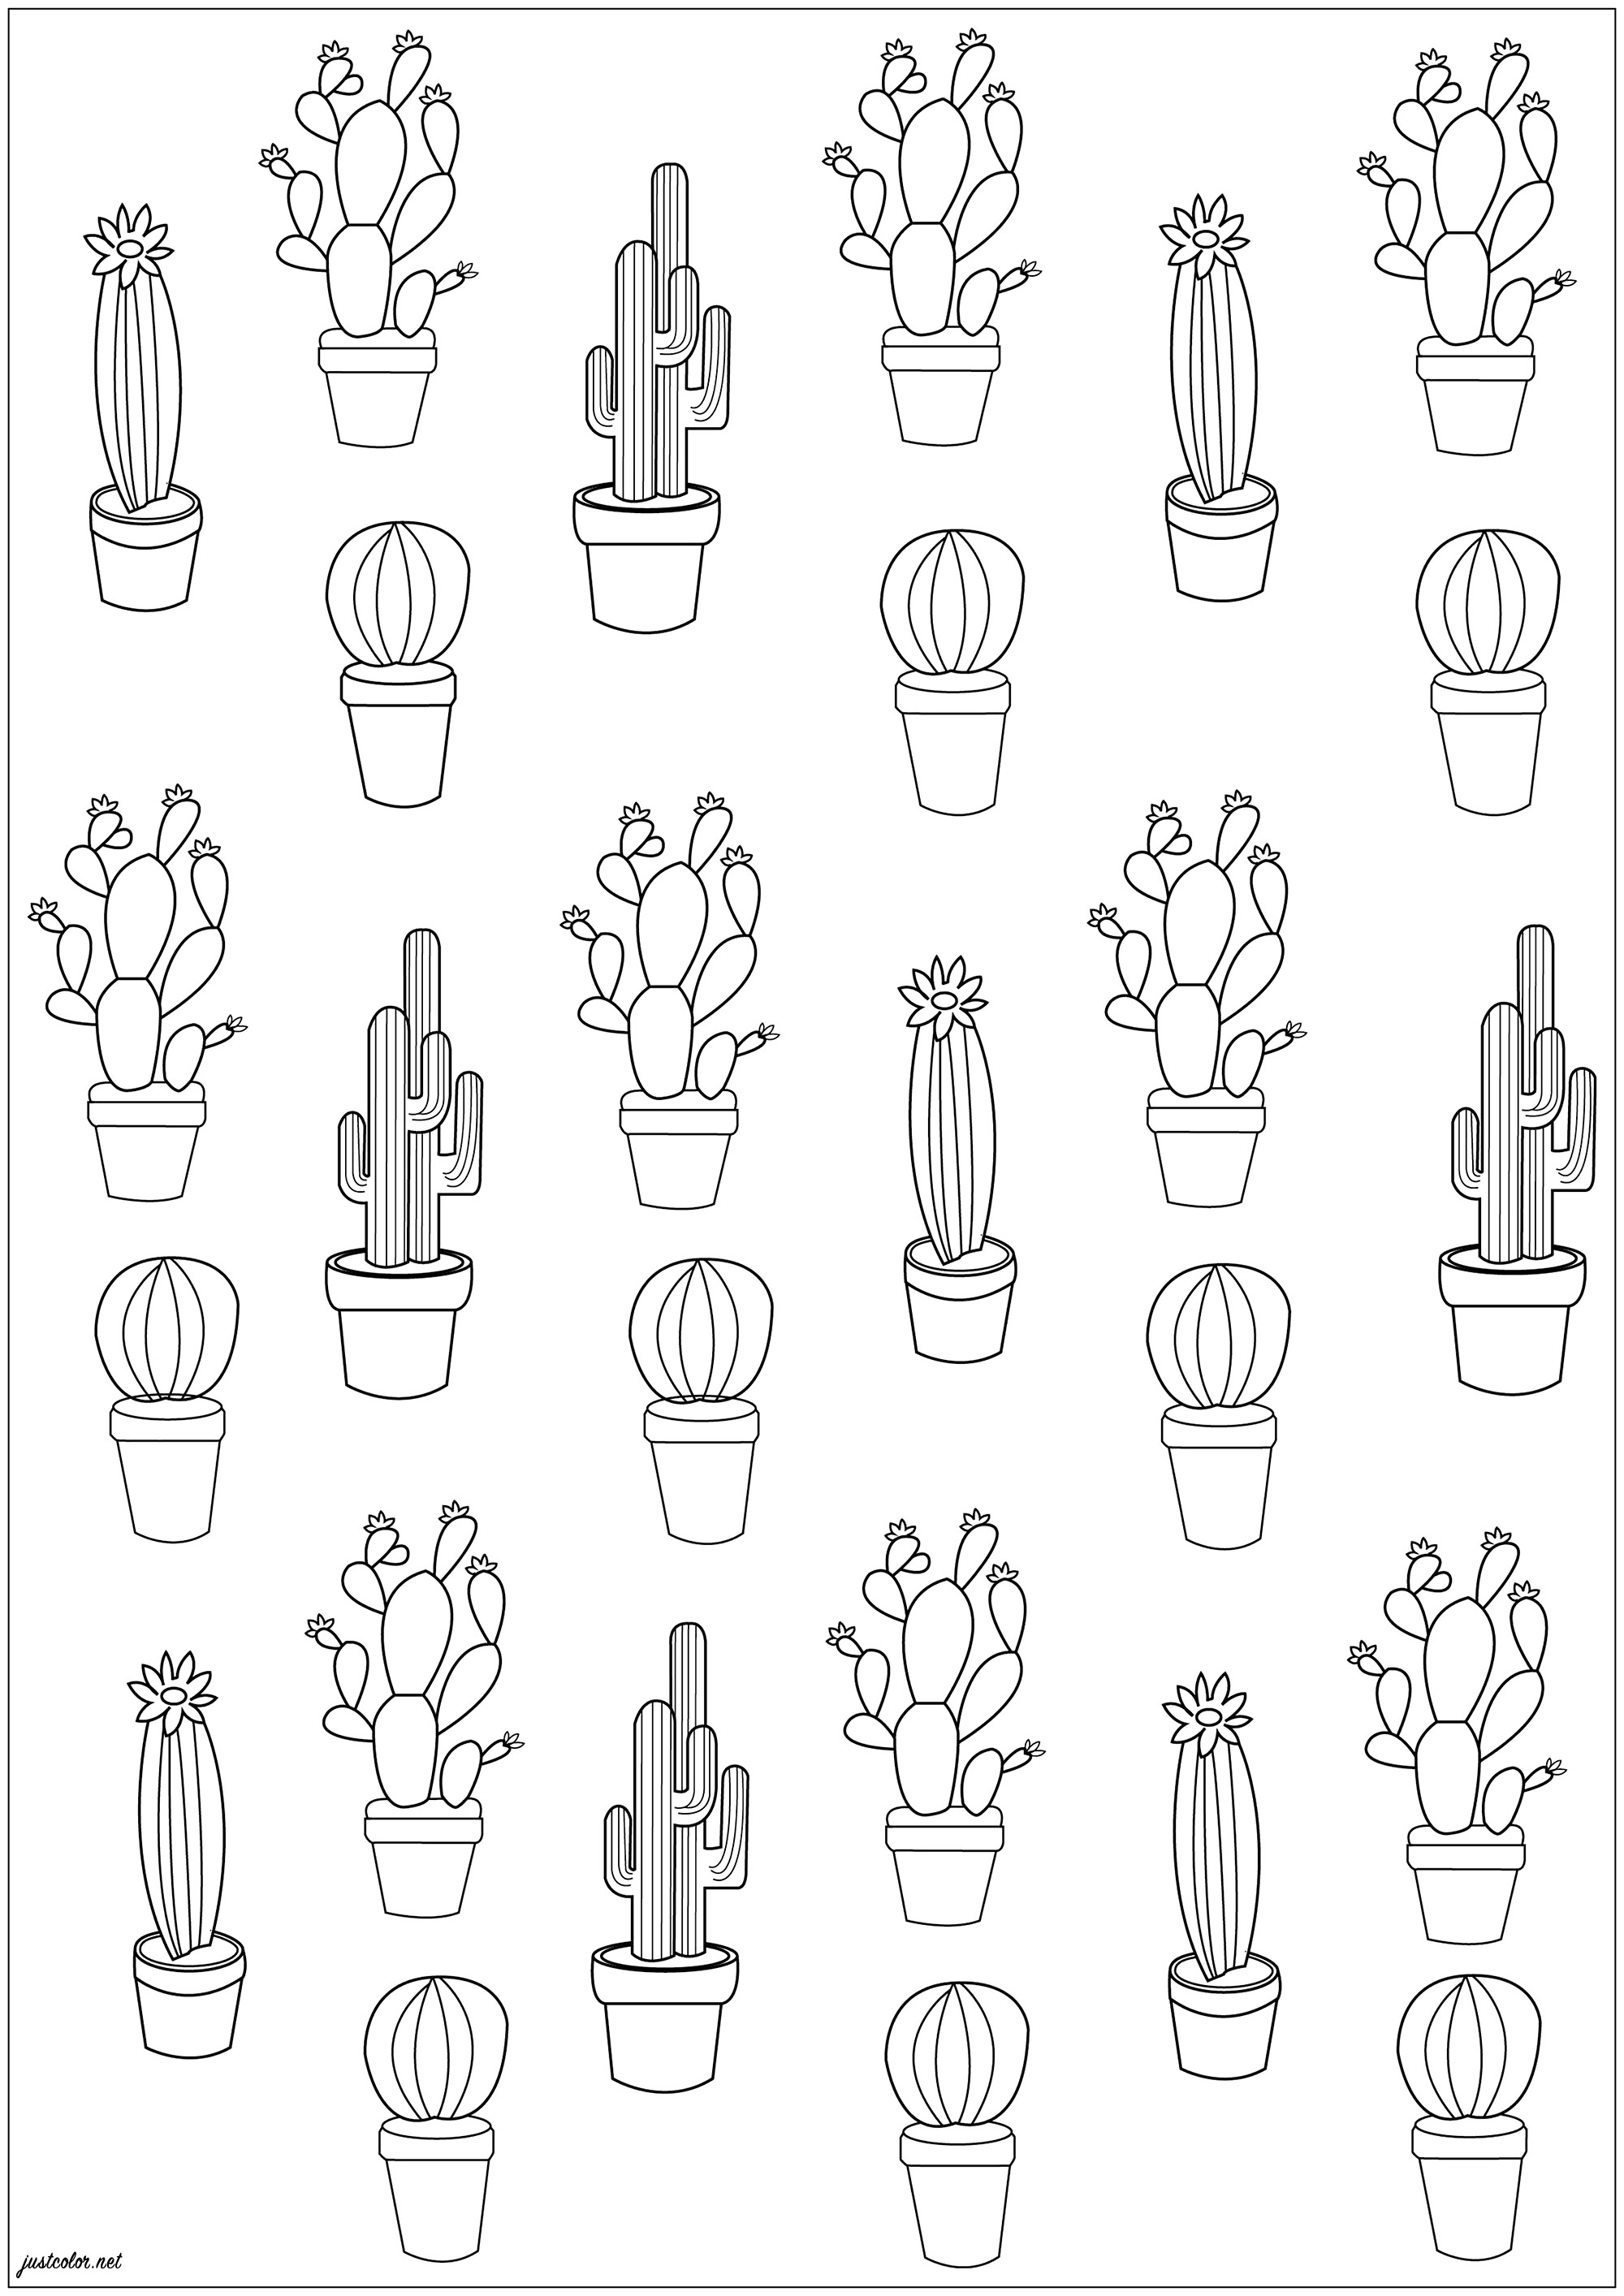 Color these 27 cacti !, Artist : Esteban